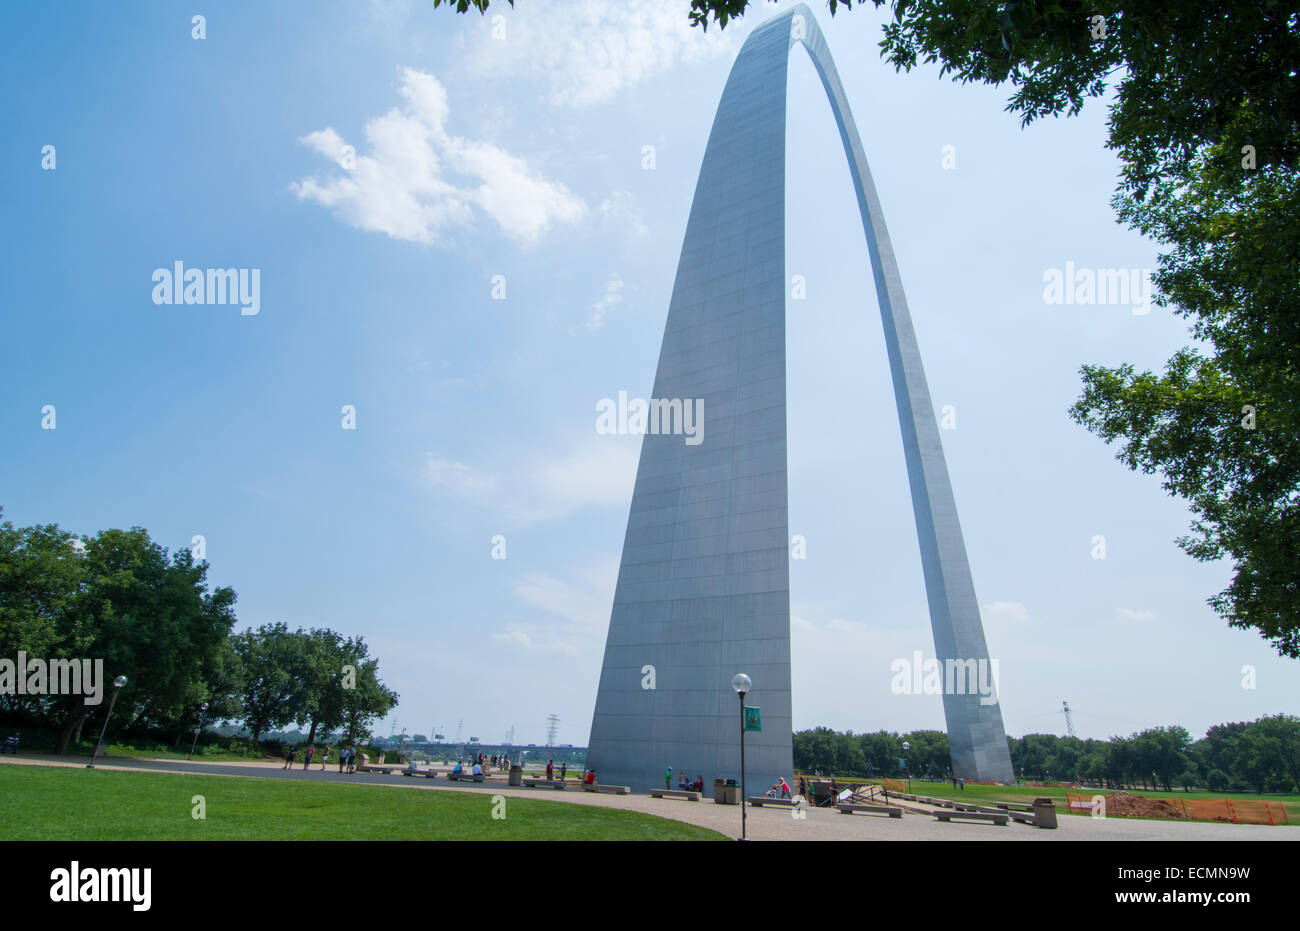 St Louis Missouri The Gateway Arch or St Louis Arch 630 feet high Stock Photo: 76673125 - Alamy